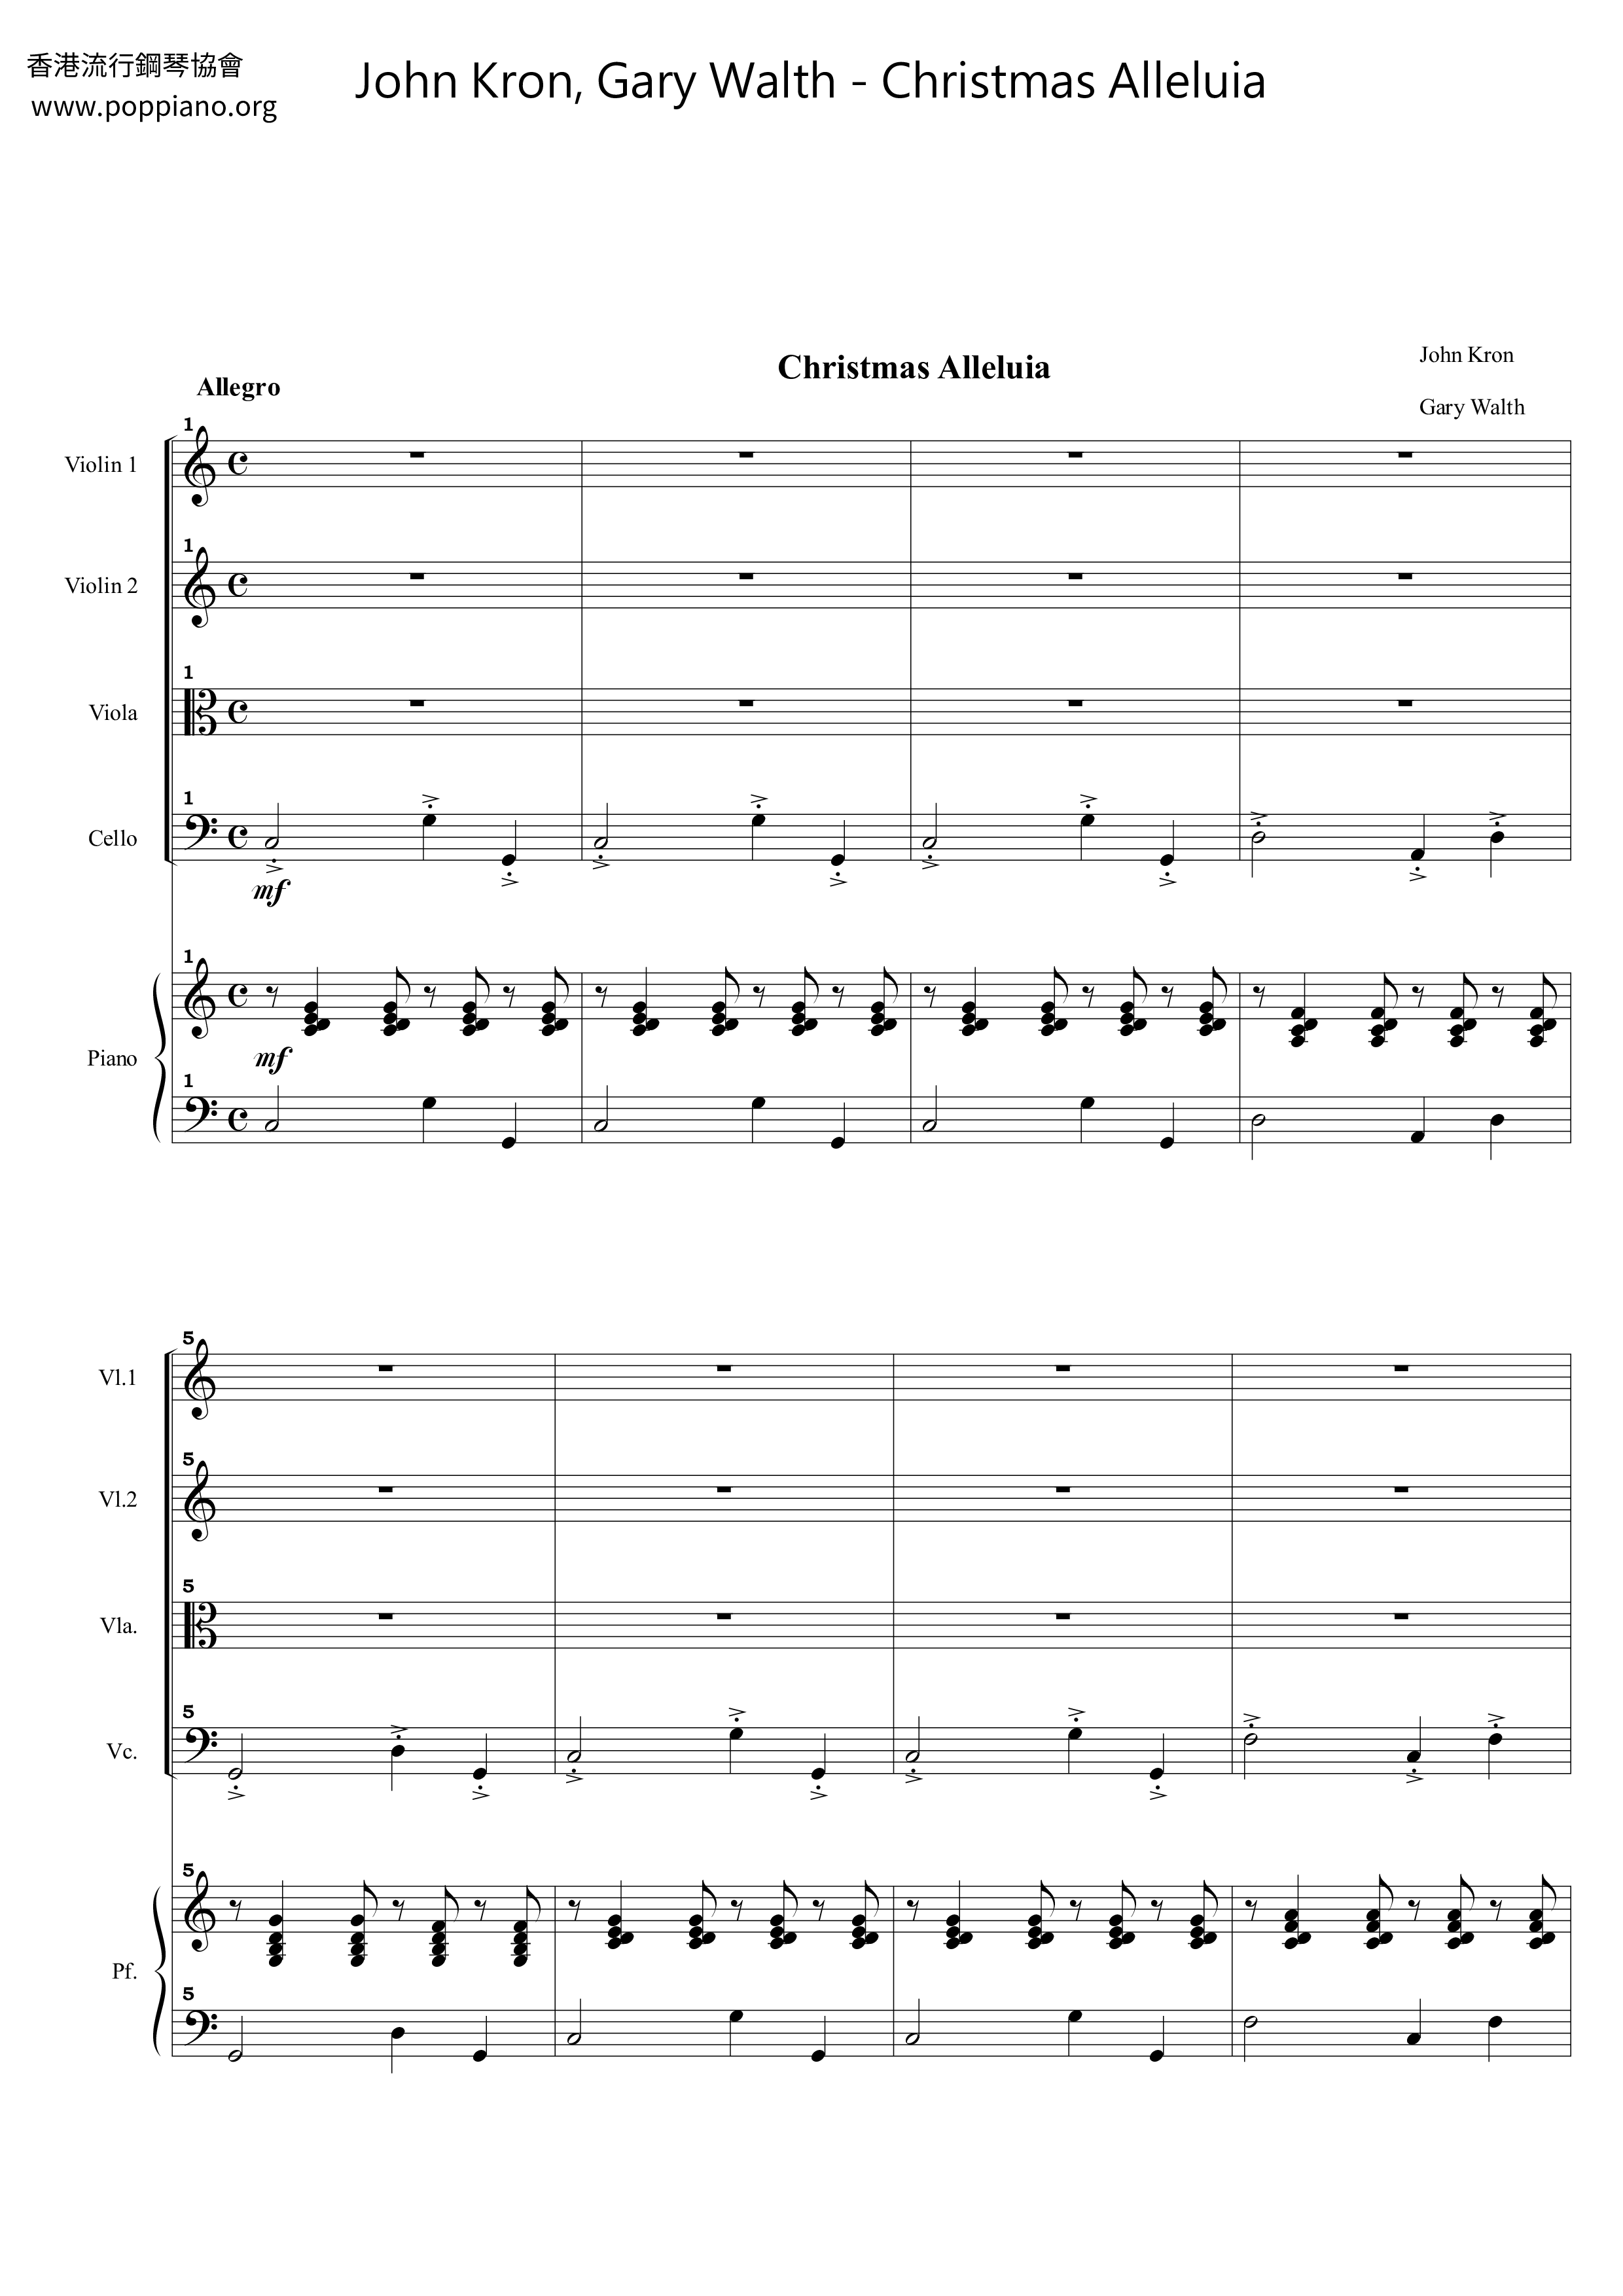 Christmas Alleluia Score